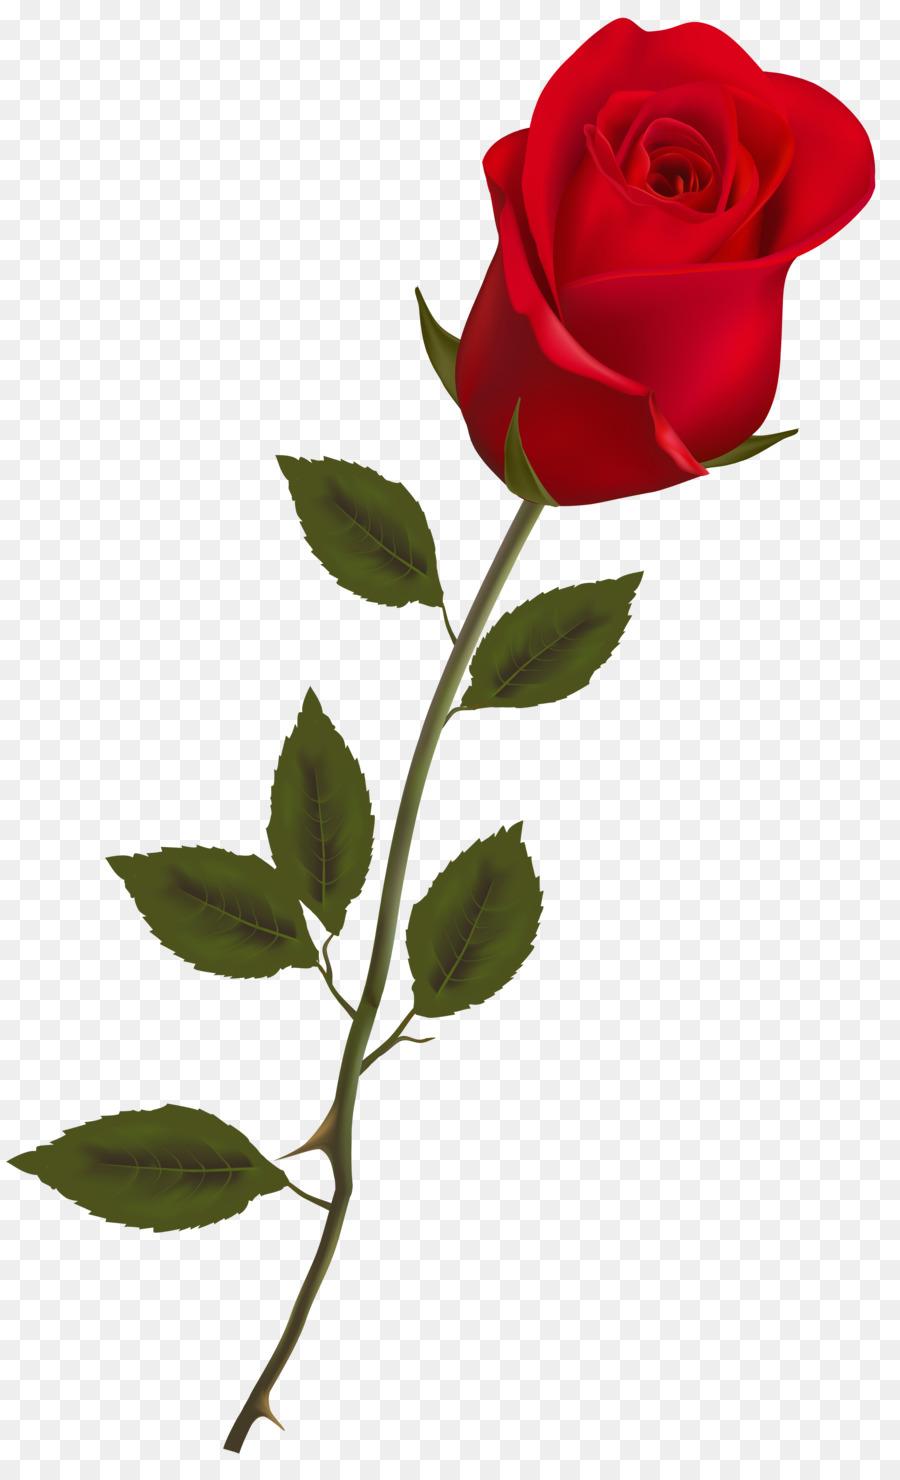 Rose Red Clip art - Rose PNG Image png download - 3064*5000 - Free Transparent Rose png Download.